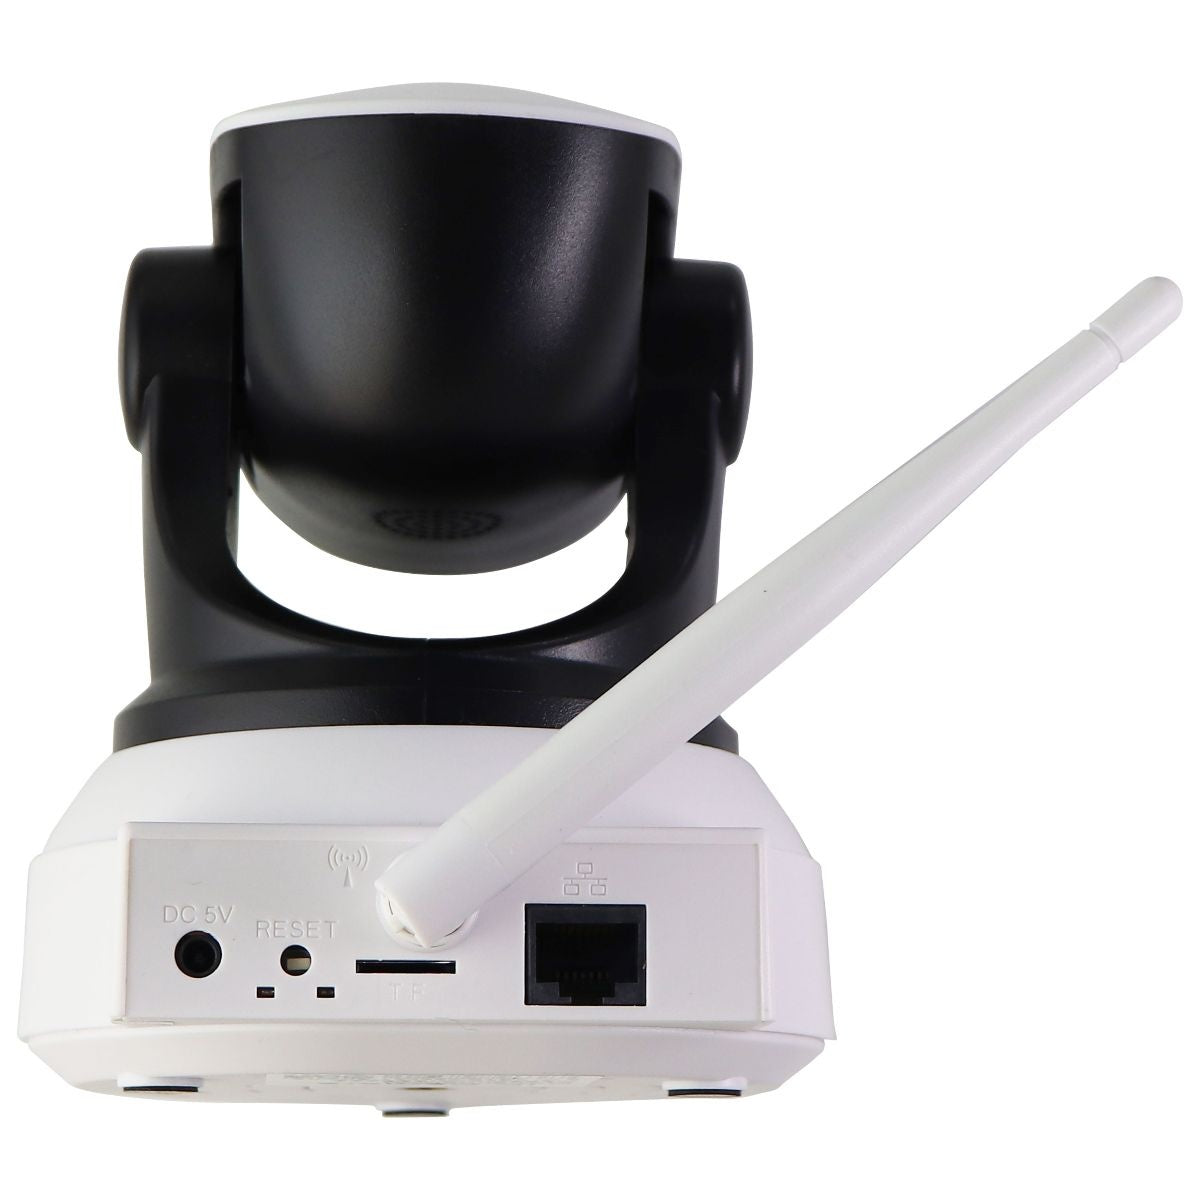 UltraLink Smart Home HD Pan & Tilt Wi-Fi Camera - White Home Surveillance - Security Cameras UltraLink    - Simple Cell Bulk Wholesale Pricing - USA Seller